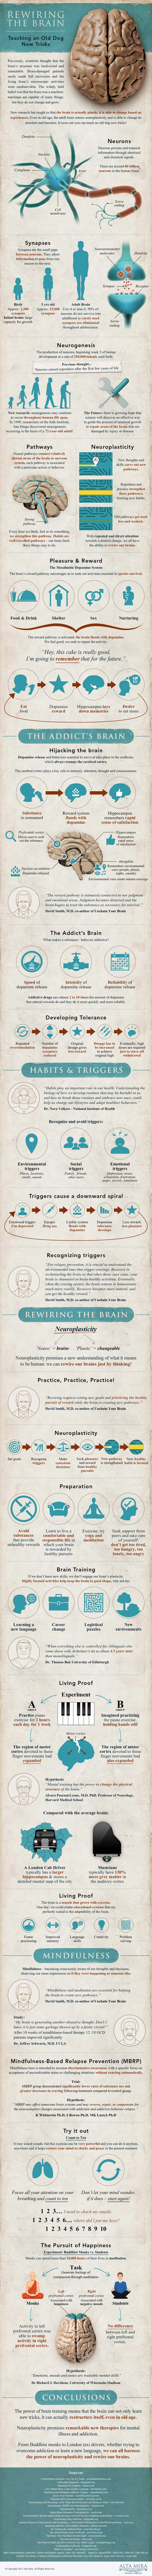 Neuroplasticity Rewiring the Brain Infographic